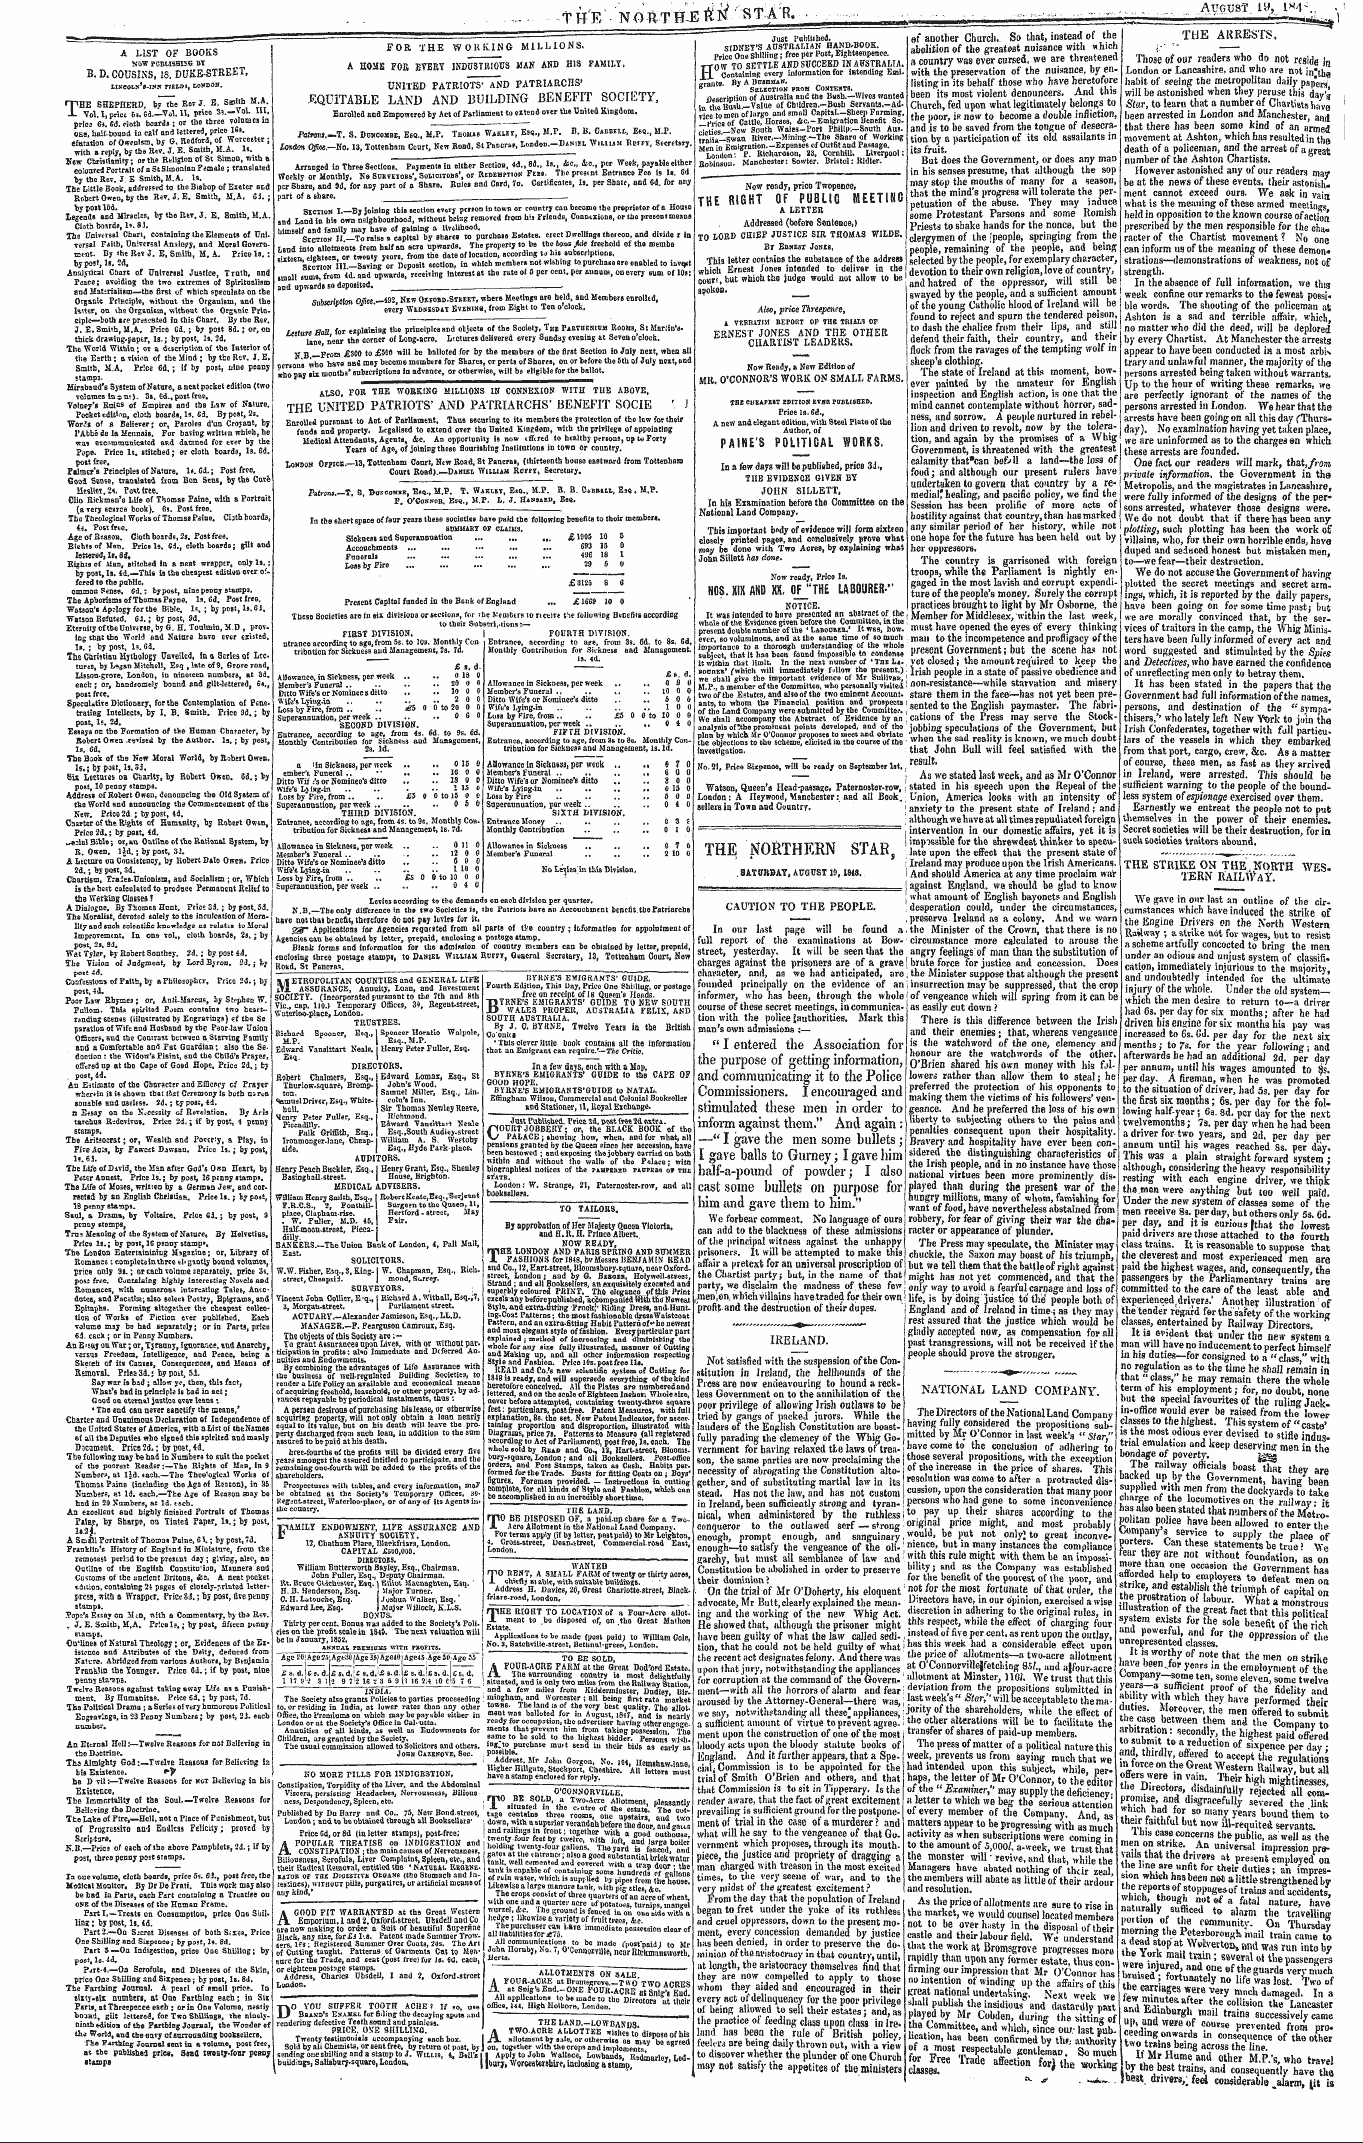 Northern Star (1837-1852): jS F Y, 3rd edition - Ad00408